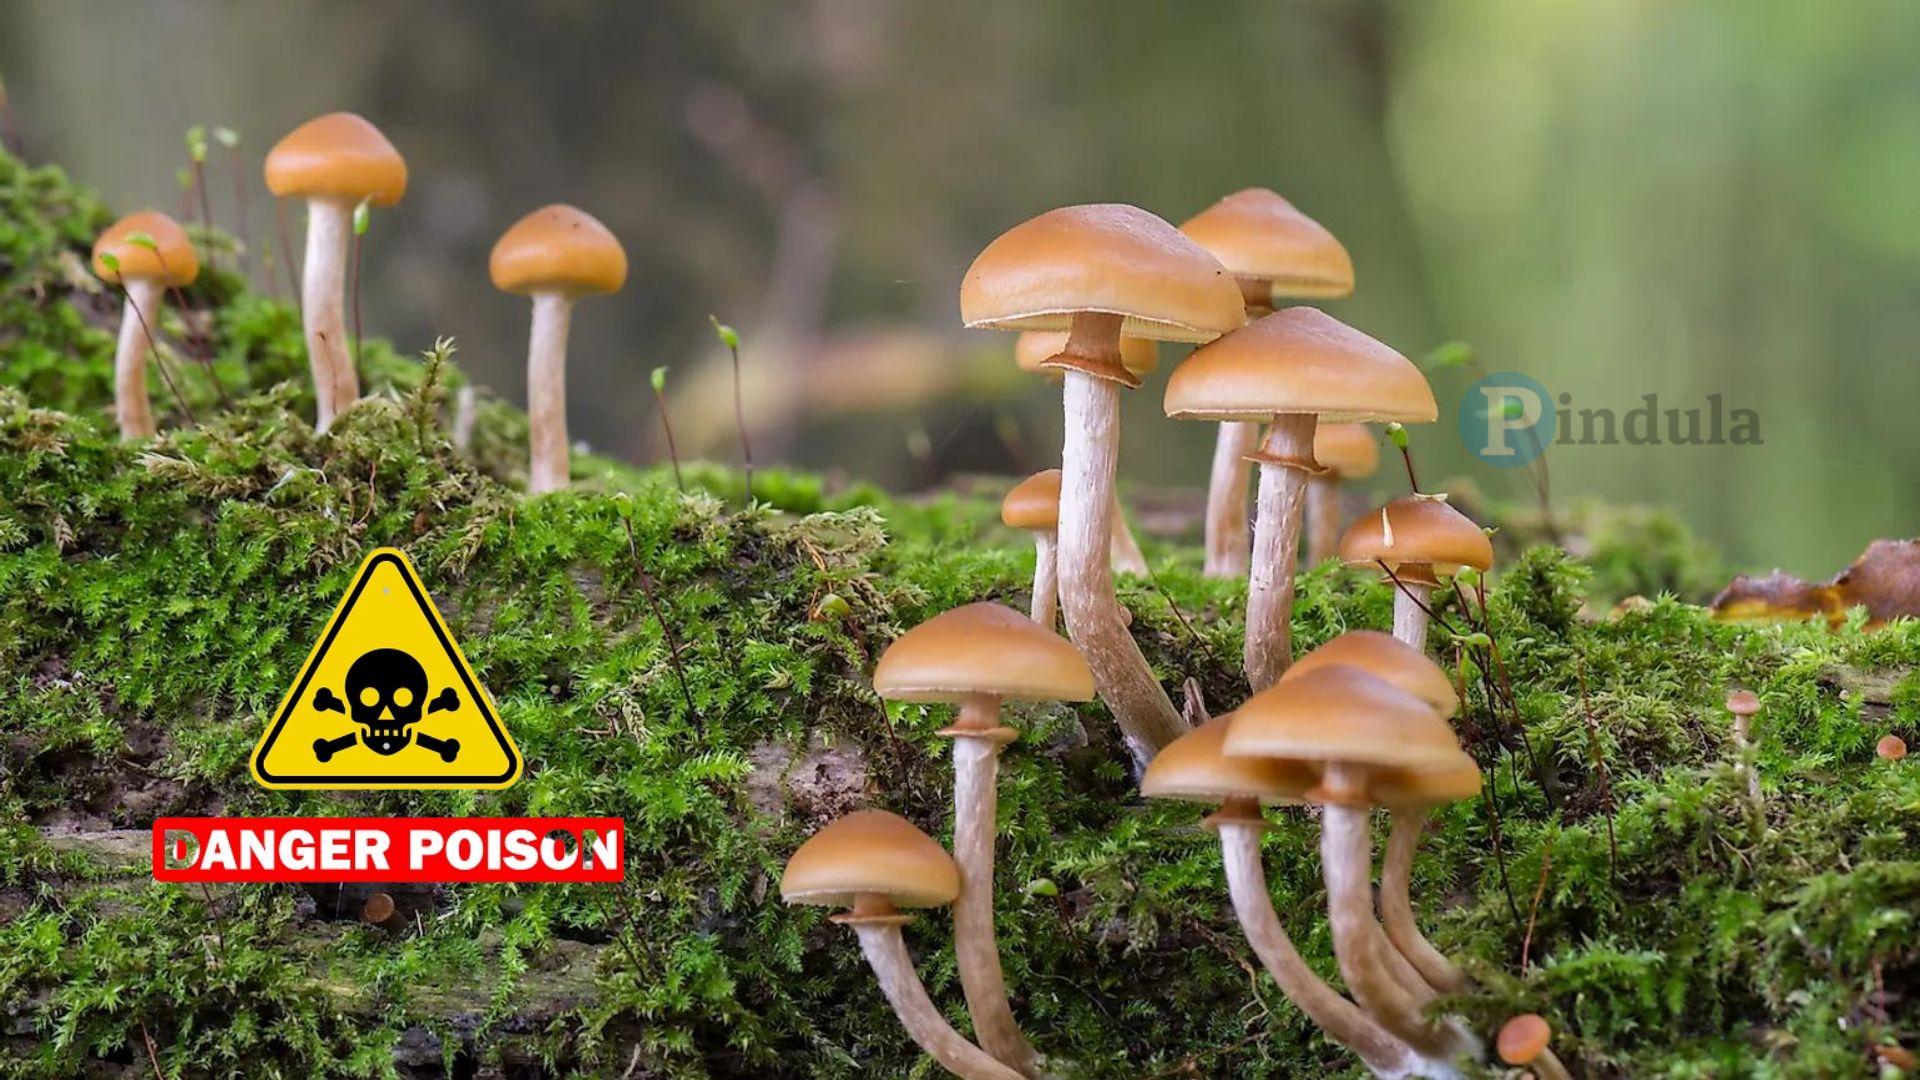 Three Kids Die After Eating Poisonous Mushrooms